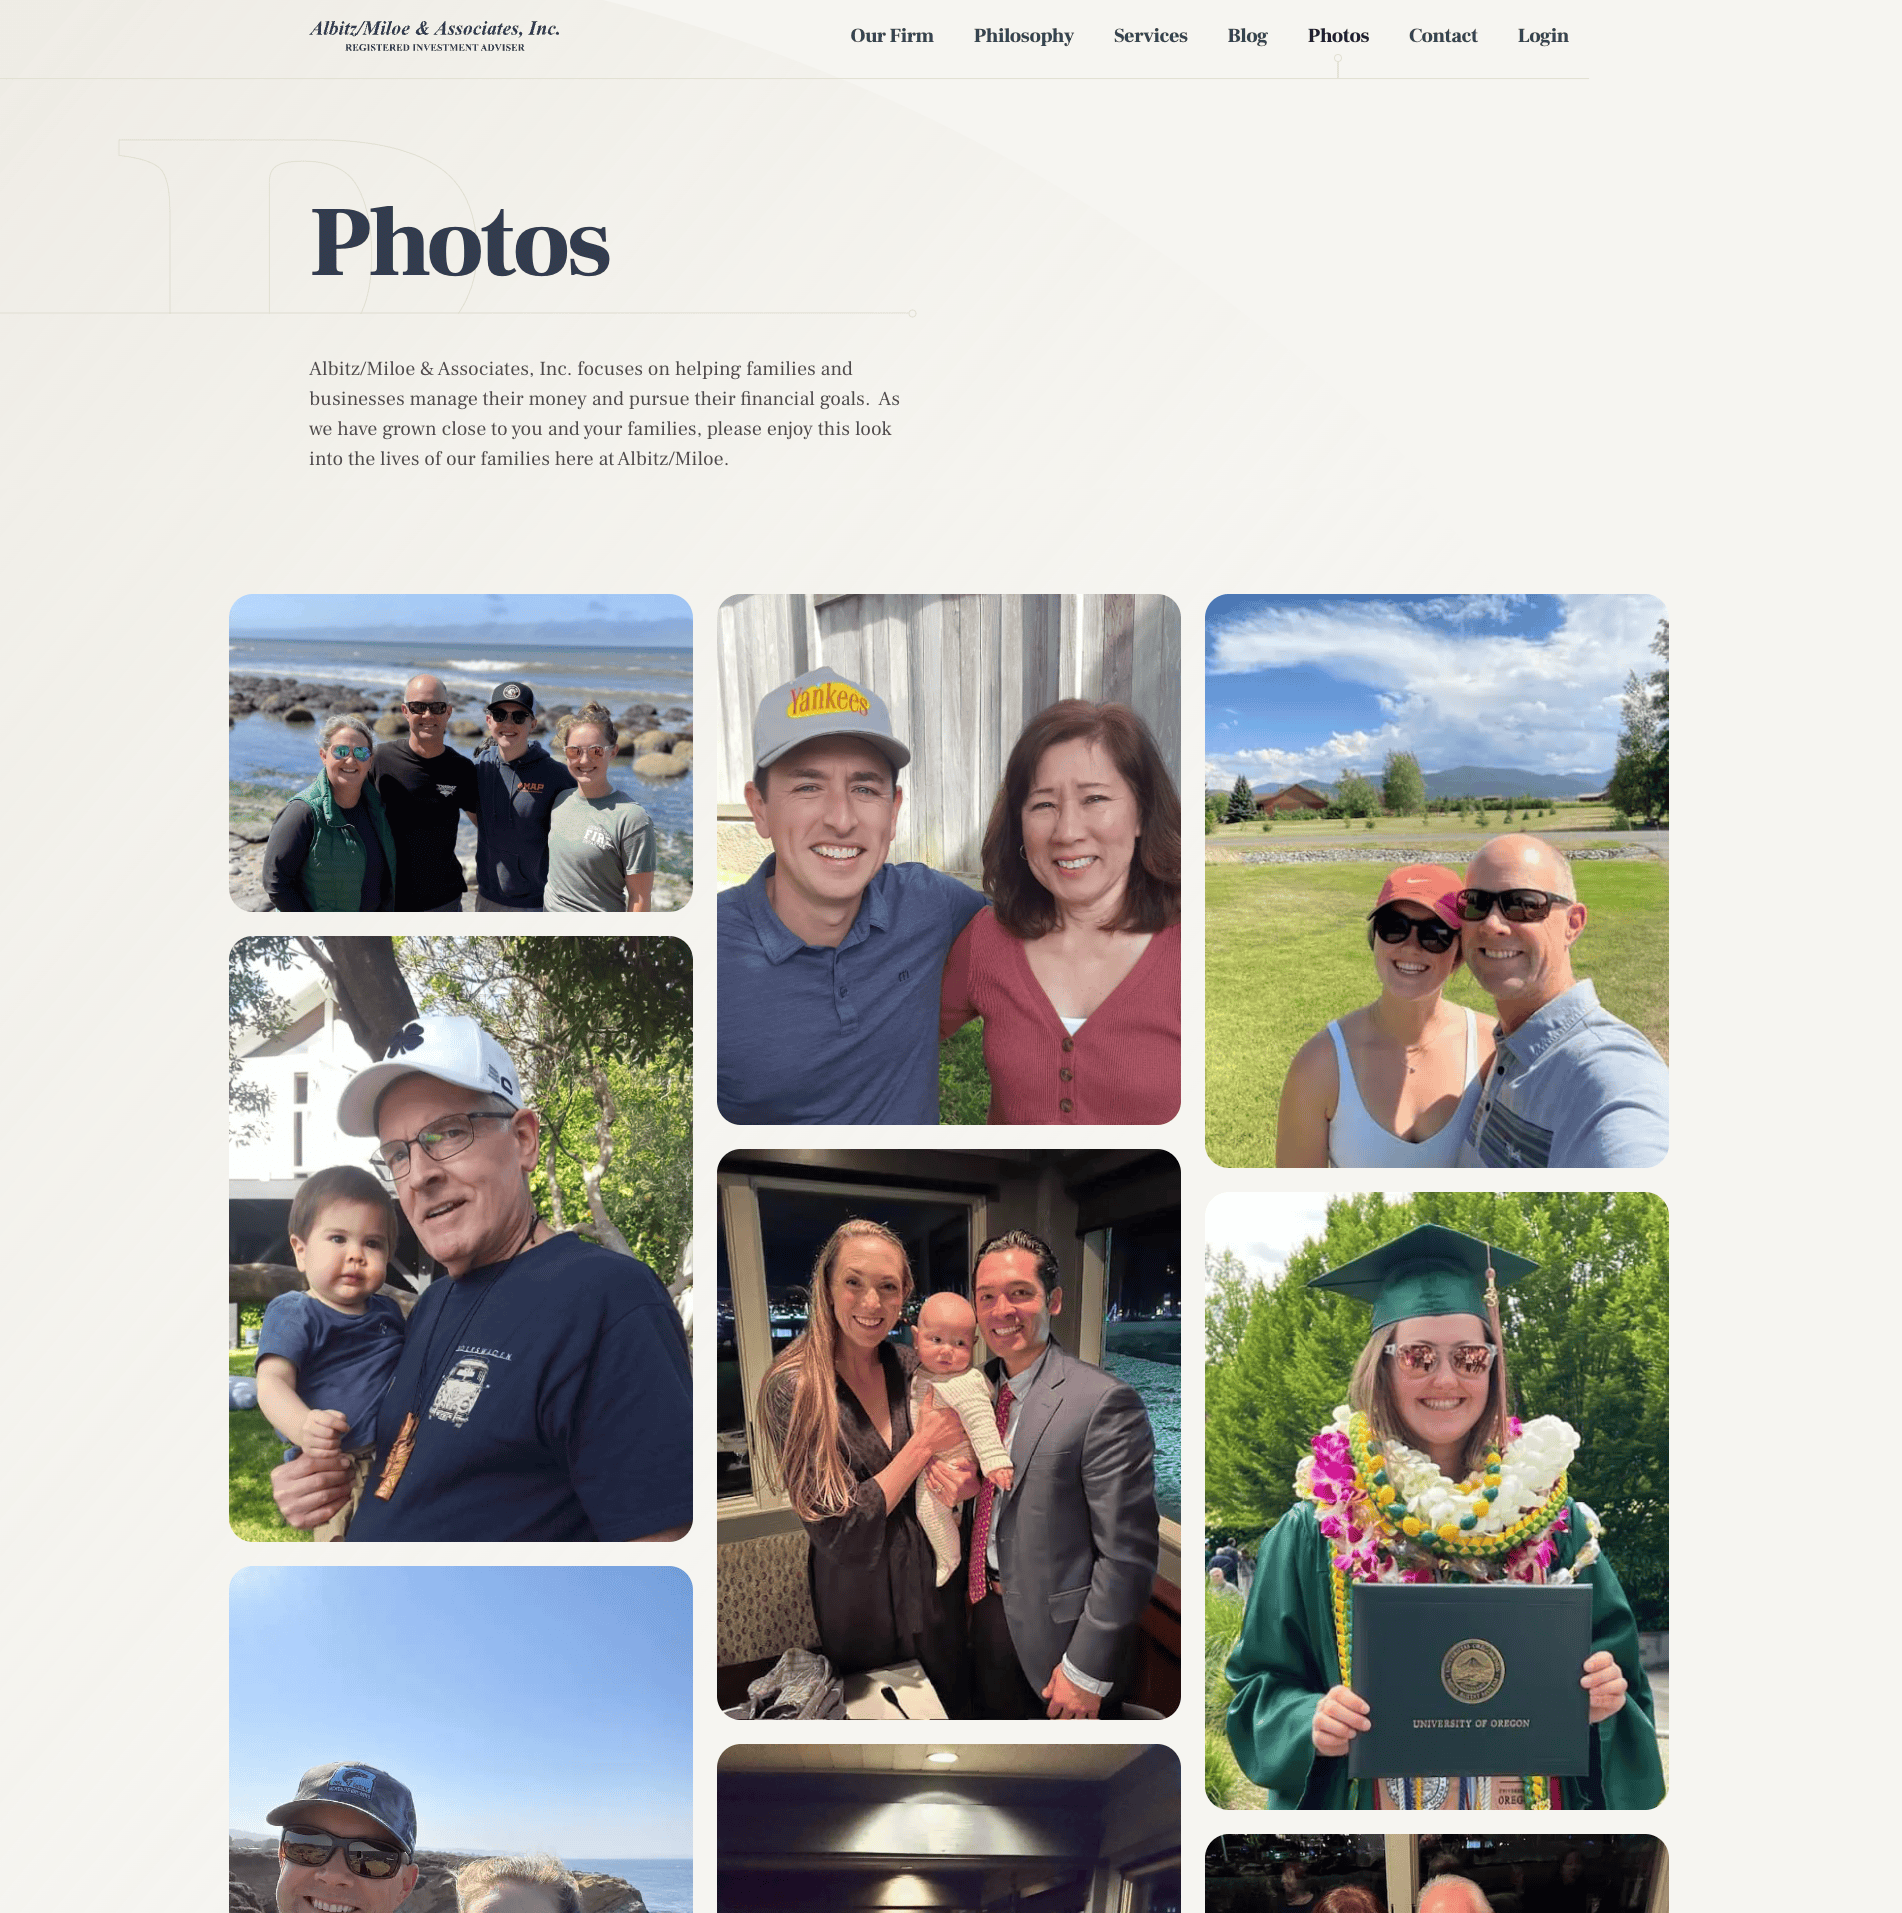 A screenshot of the new Albitz/Miloe website showing their family photos